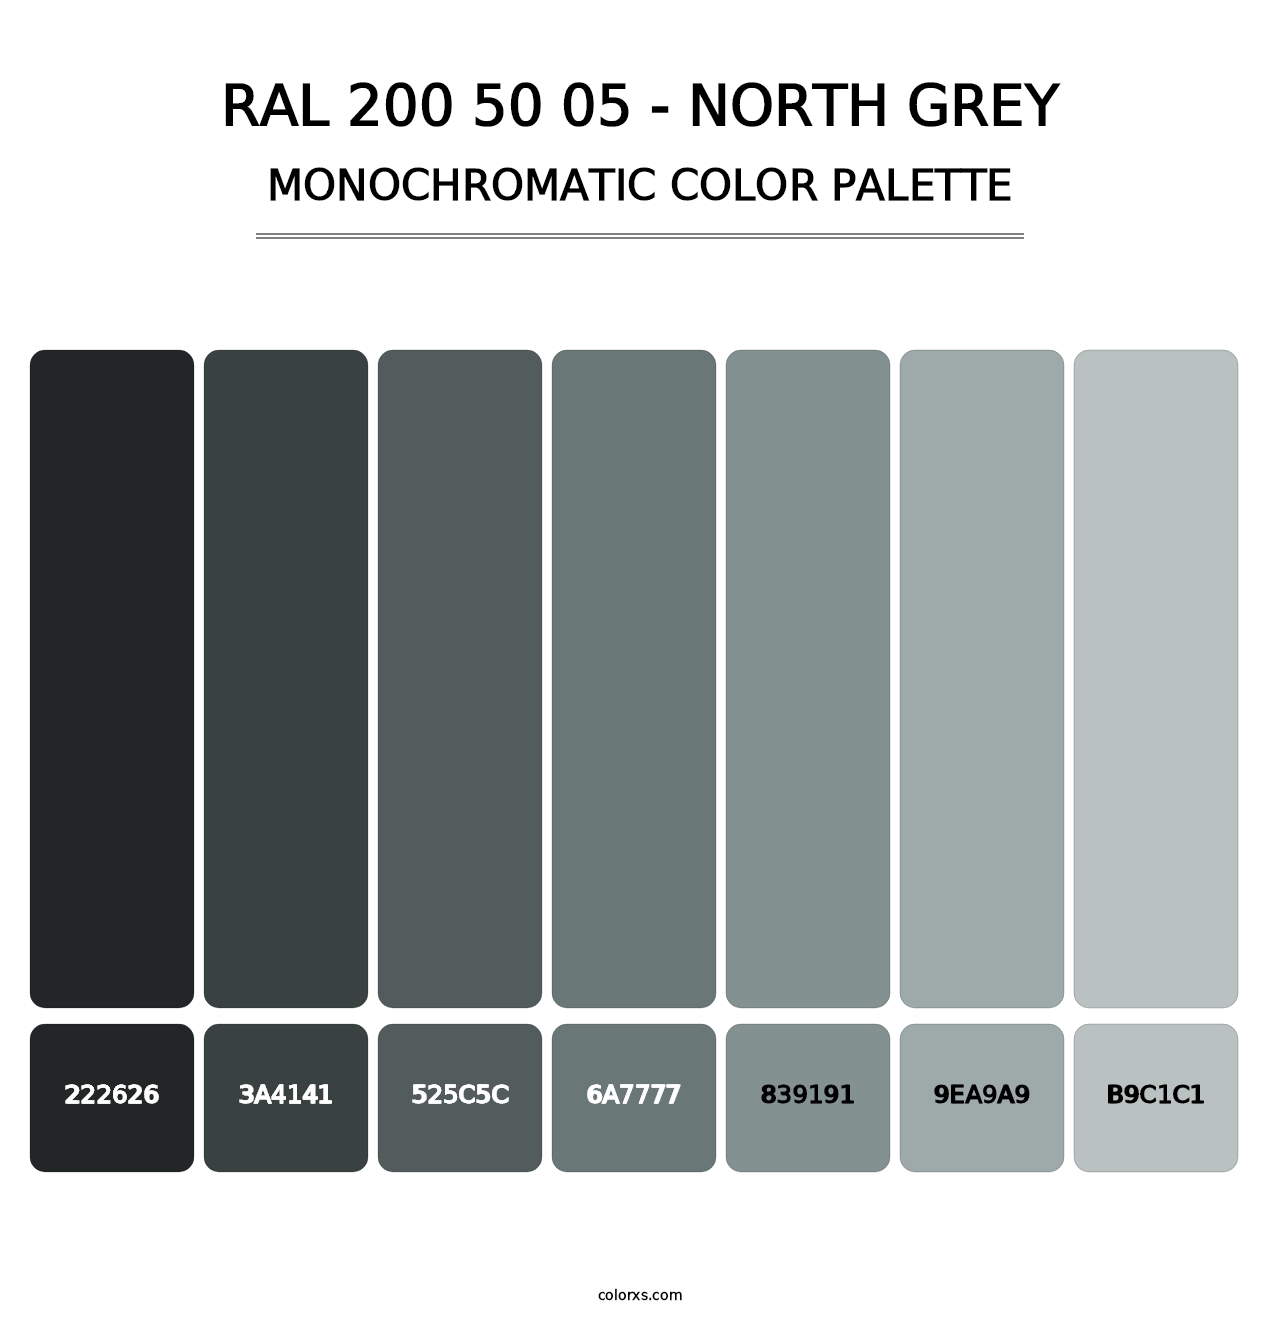 RAL 200 50 05 - North Grey - Monochromatic Color Palette